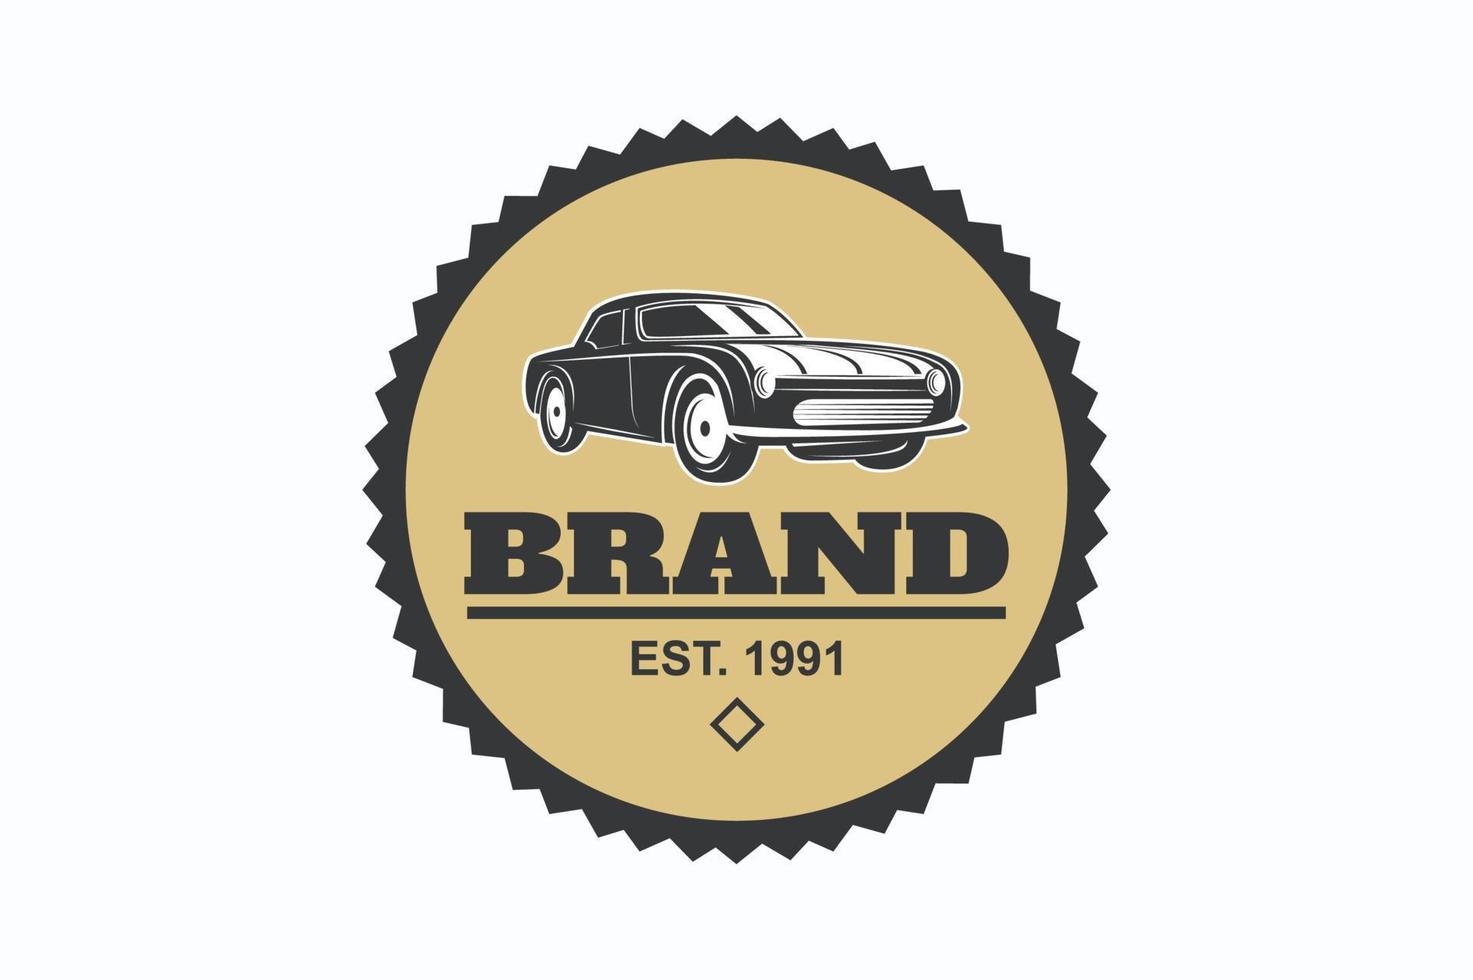 Car logos templates vector design elements, vintage style emblems and badges retro illustration.